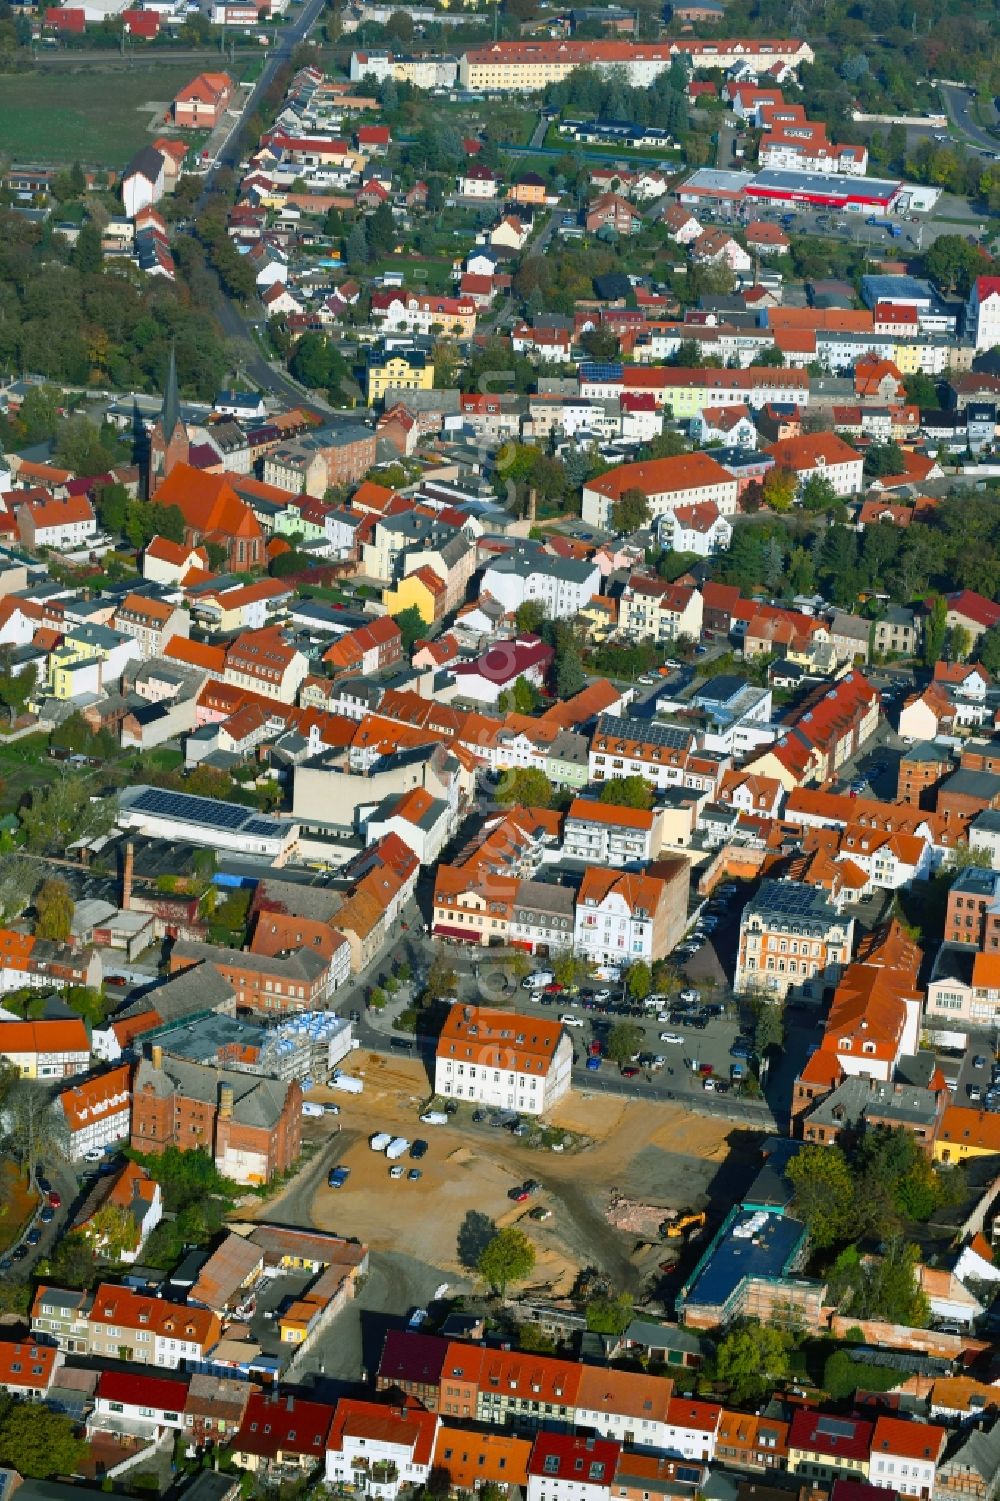 Aerial image Burg - Demolition of the building area on Bruederstrasse in Burg in the state Saxony-Anhalt, Germany